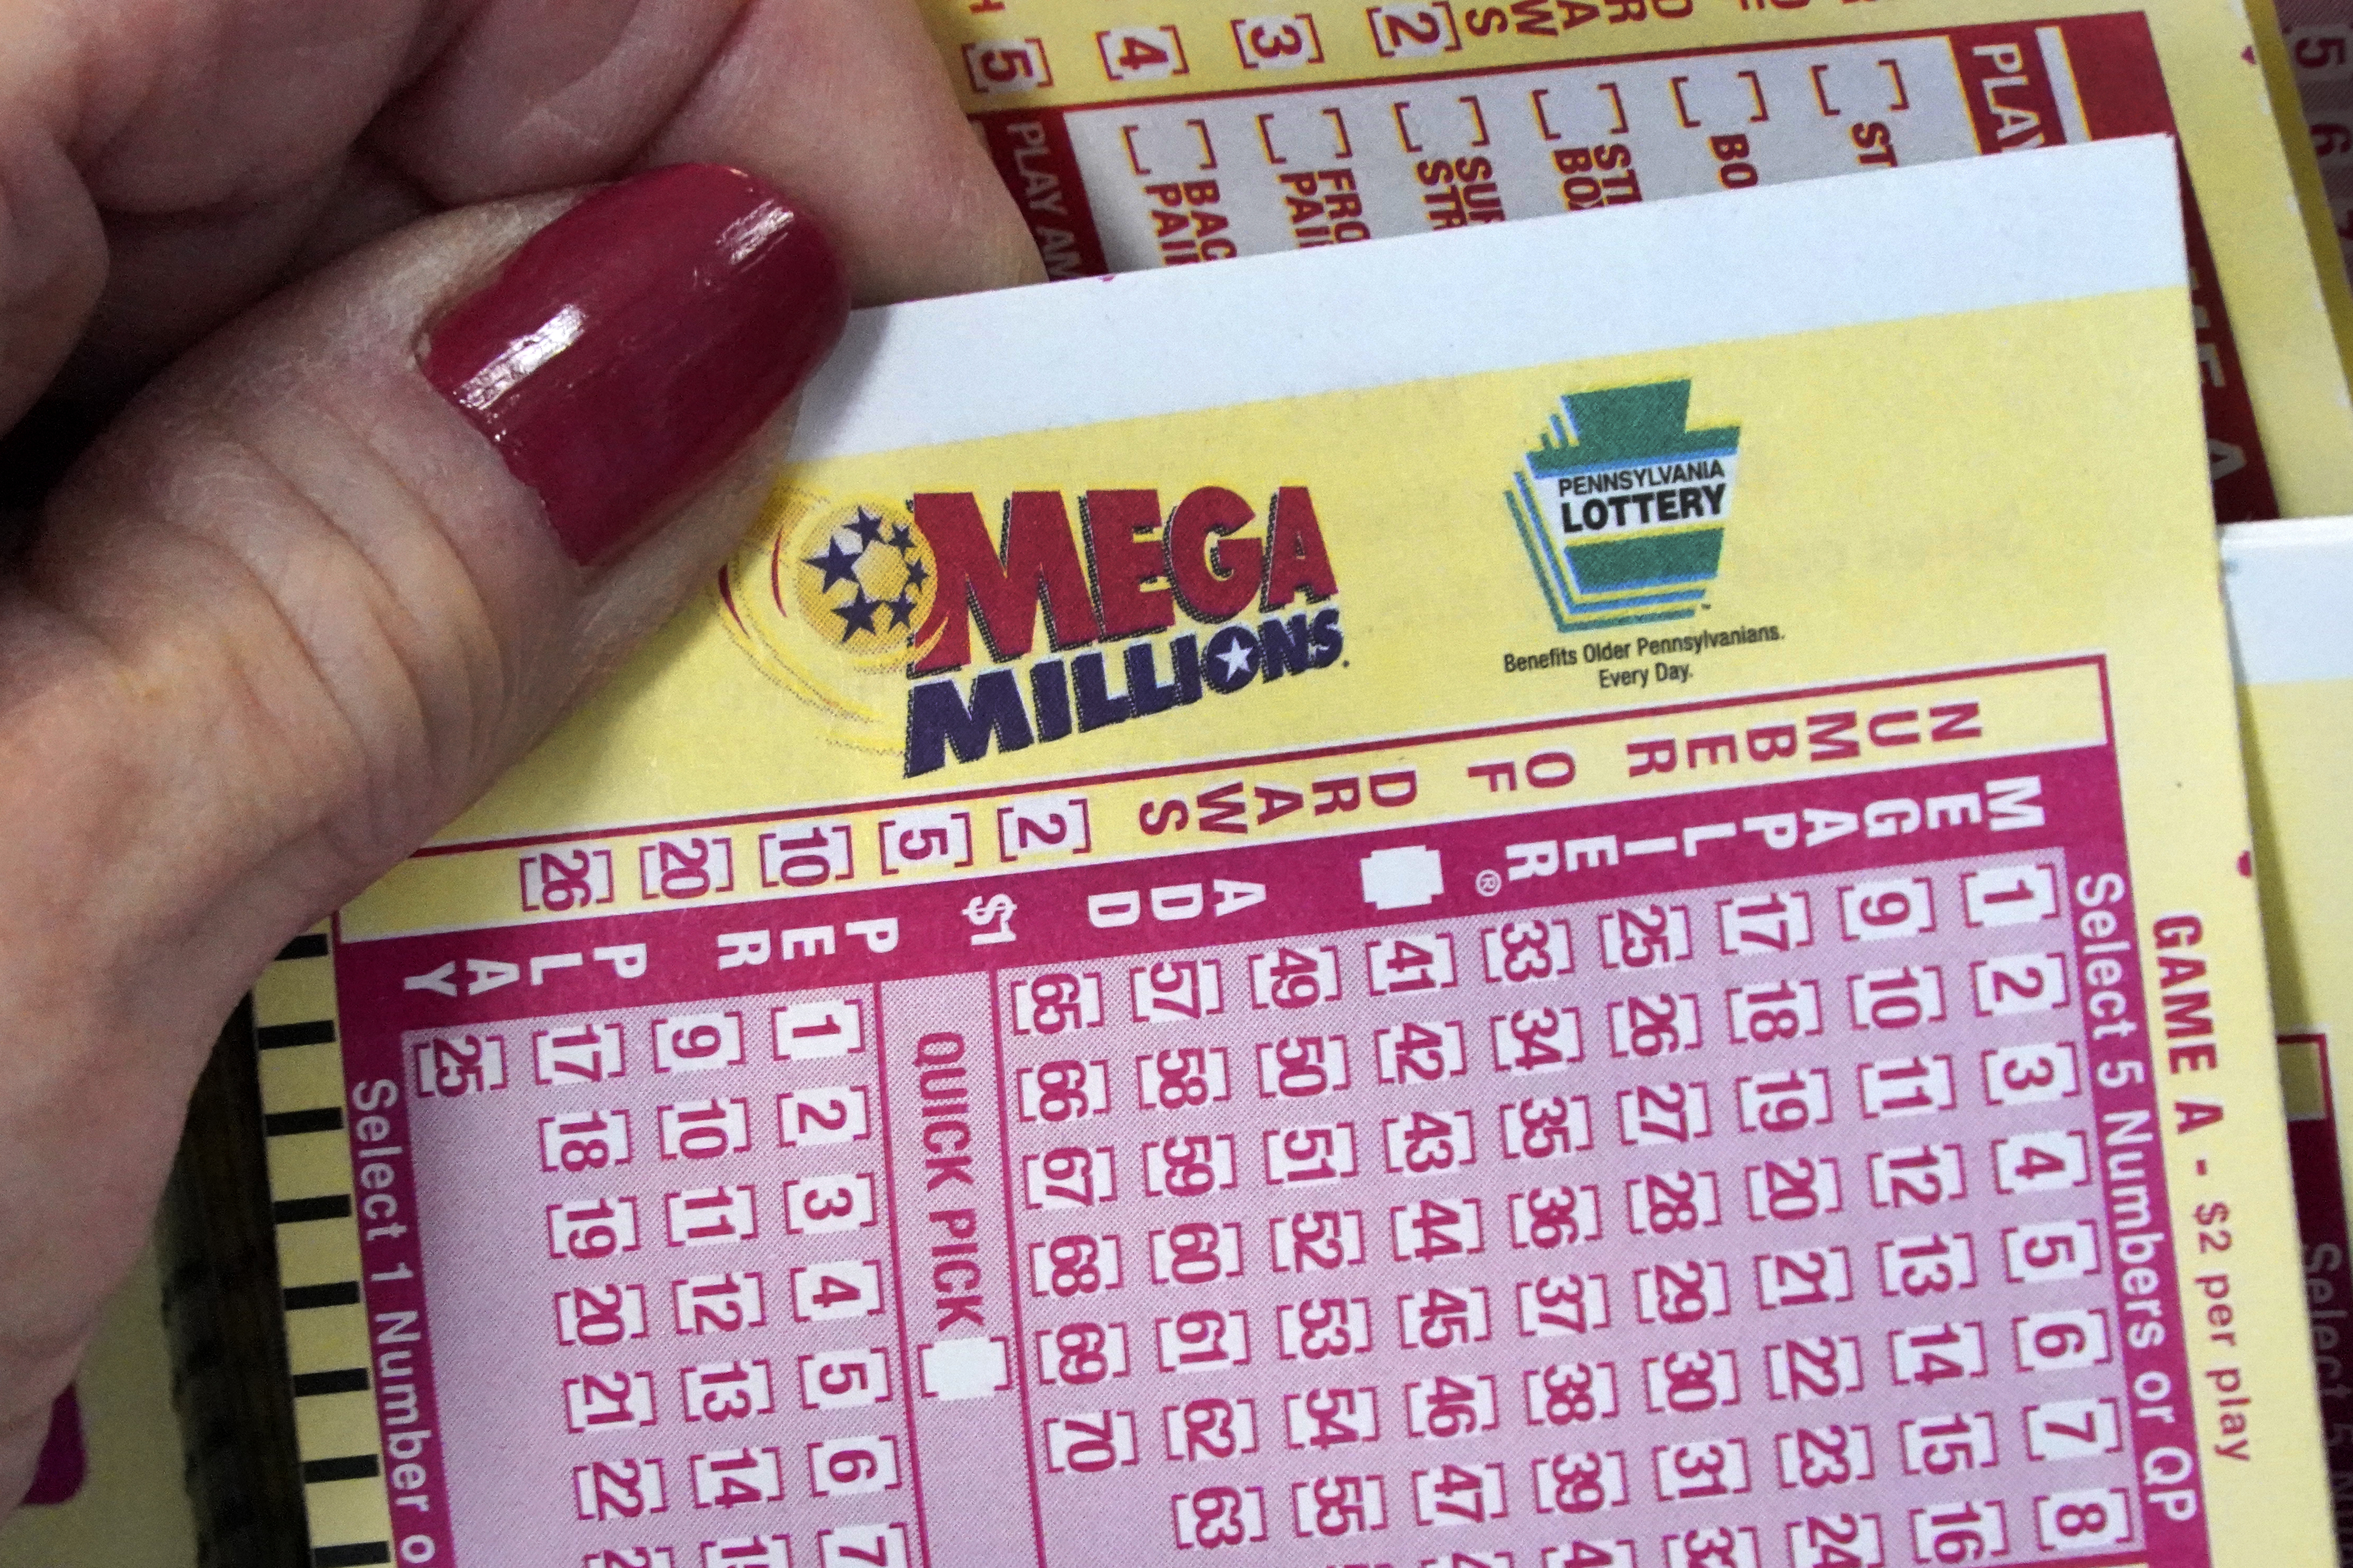 Arizona lottery: 3 ticket holders won big, prizes still unclaimed